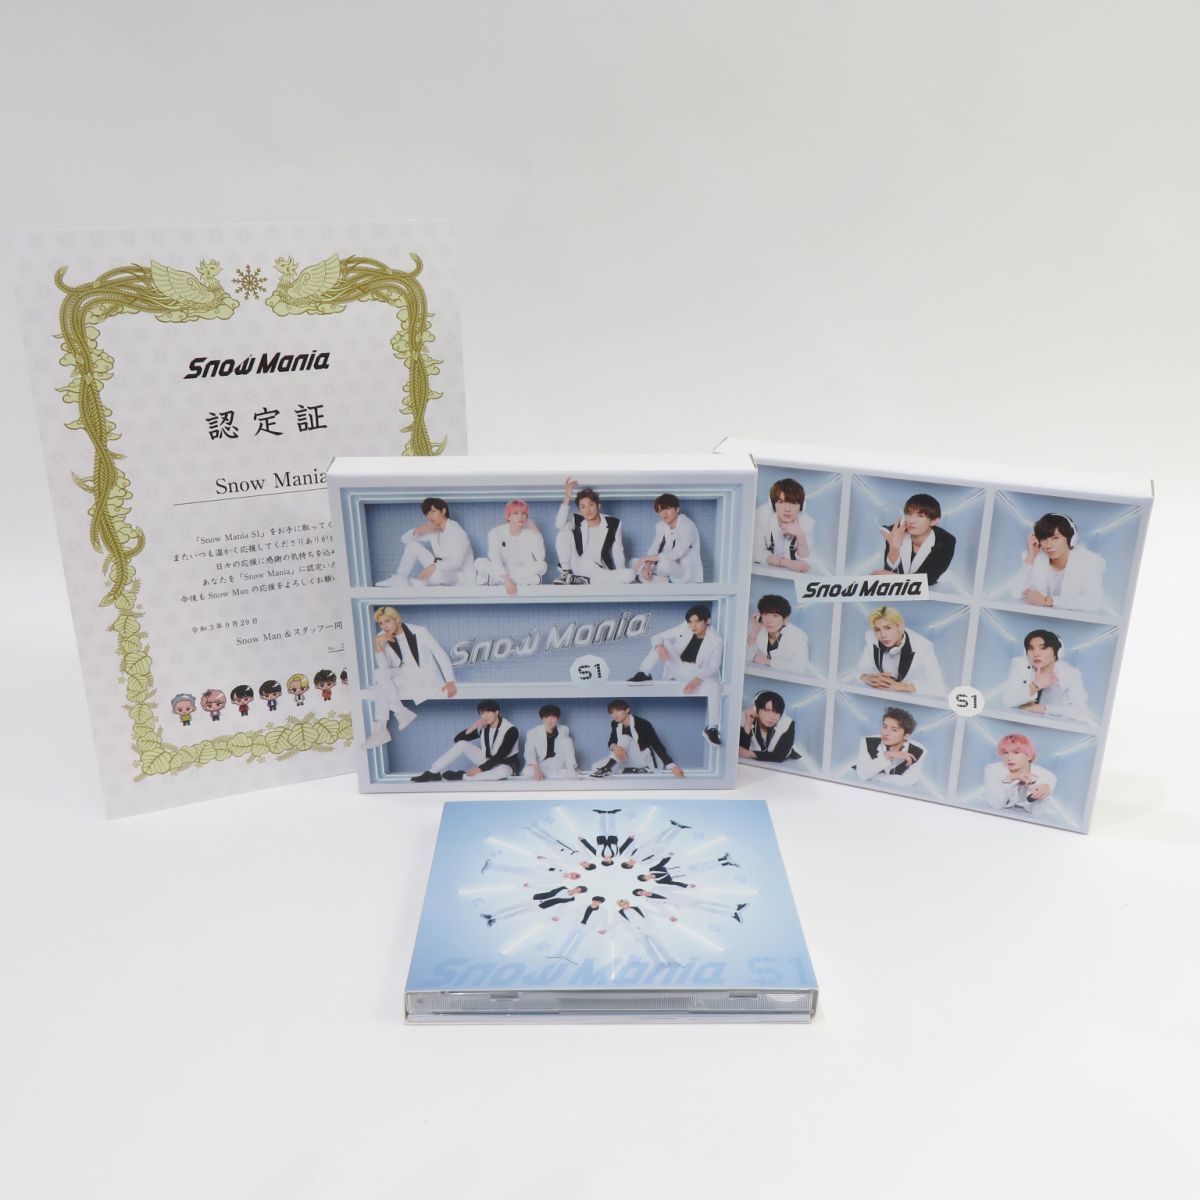 2CD+DVD / CD+DVD / CD Snow Man Snow Mania S1 初回盤A / 初回盤B